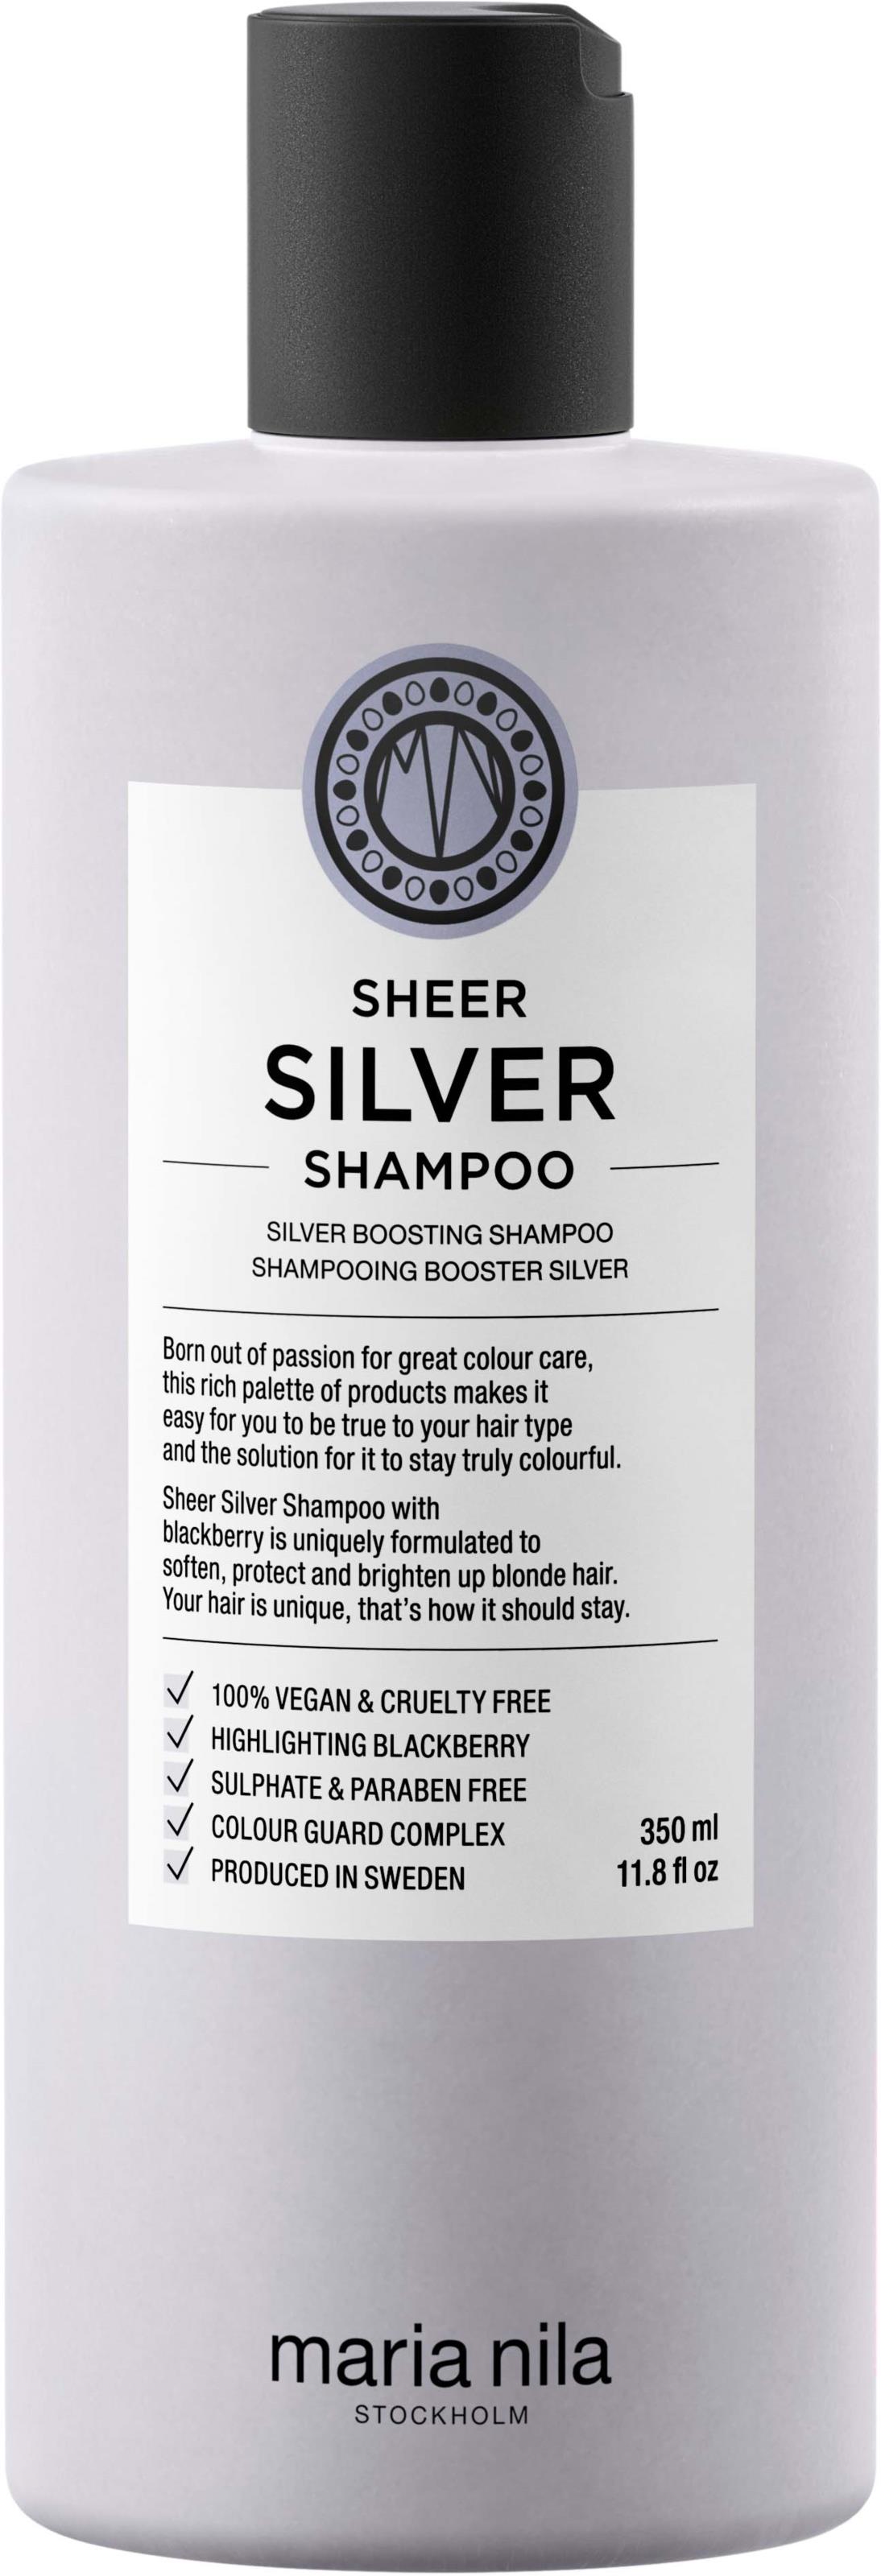 vente bad Spaceship maria nila Sheer Silver Shampoo 350 ml | lyko.com